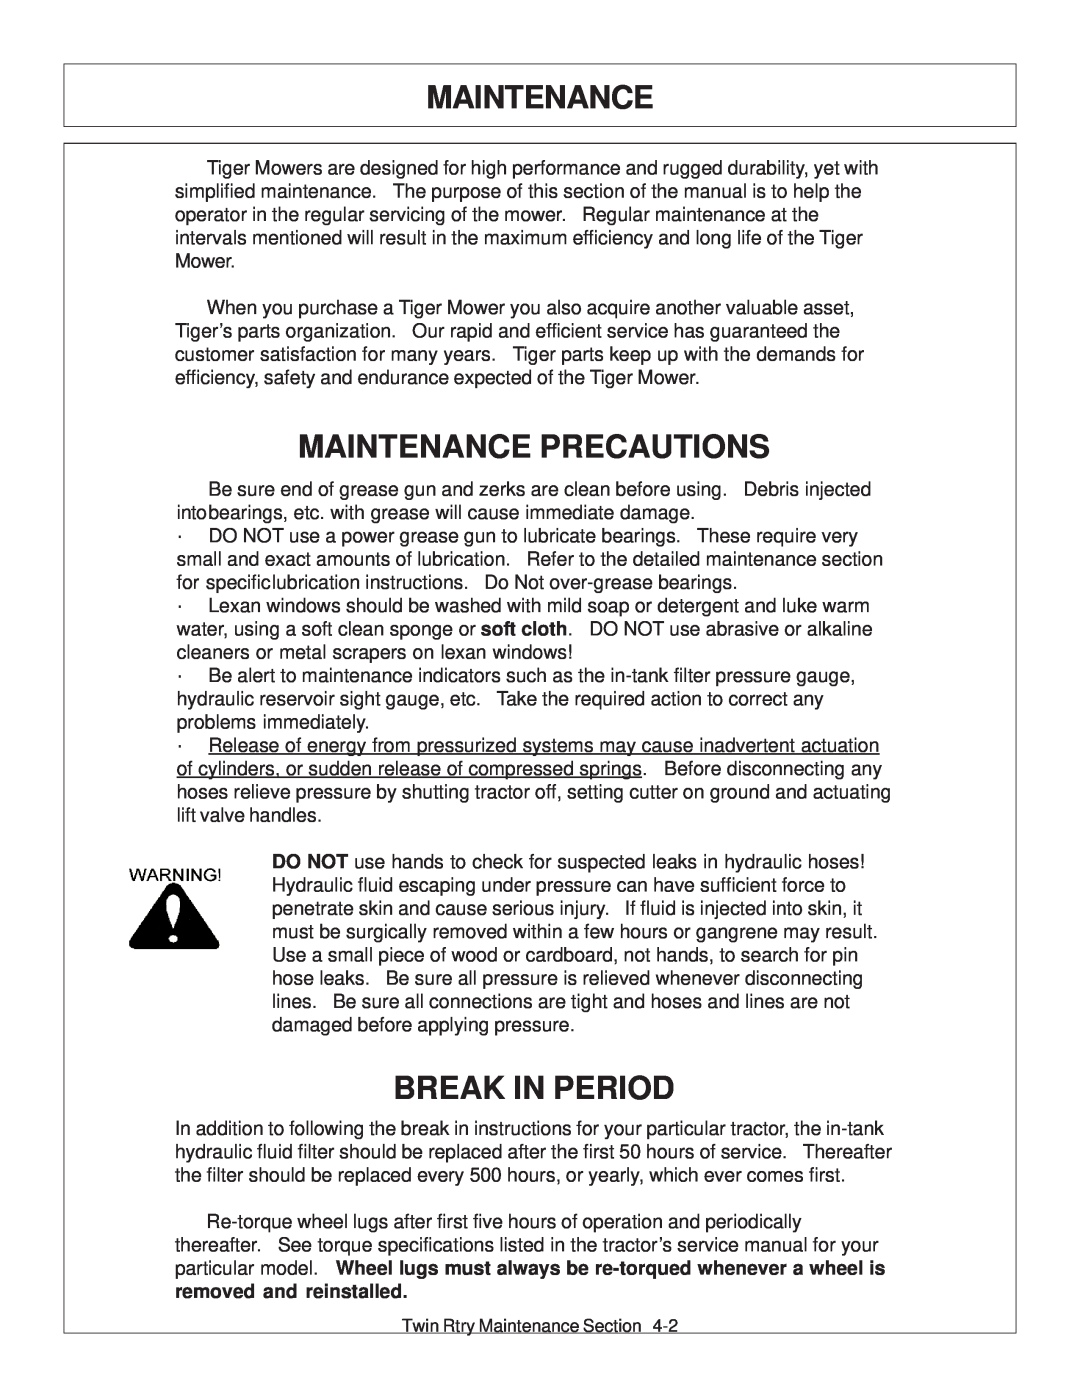 Tiger Products Co., Ltd 6020009 manual Maintenance Precautions, Break In Period 